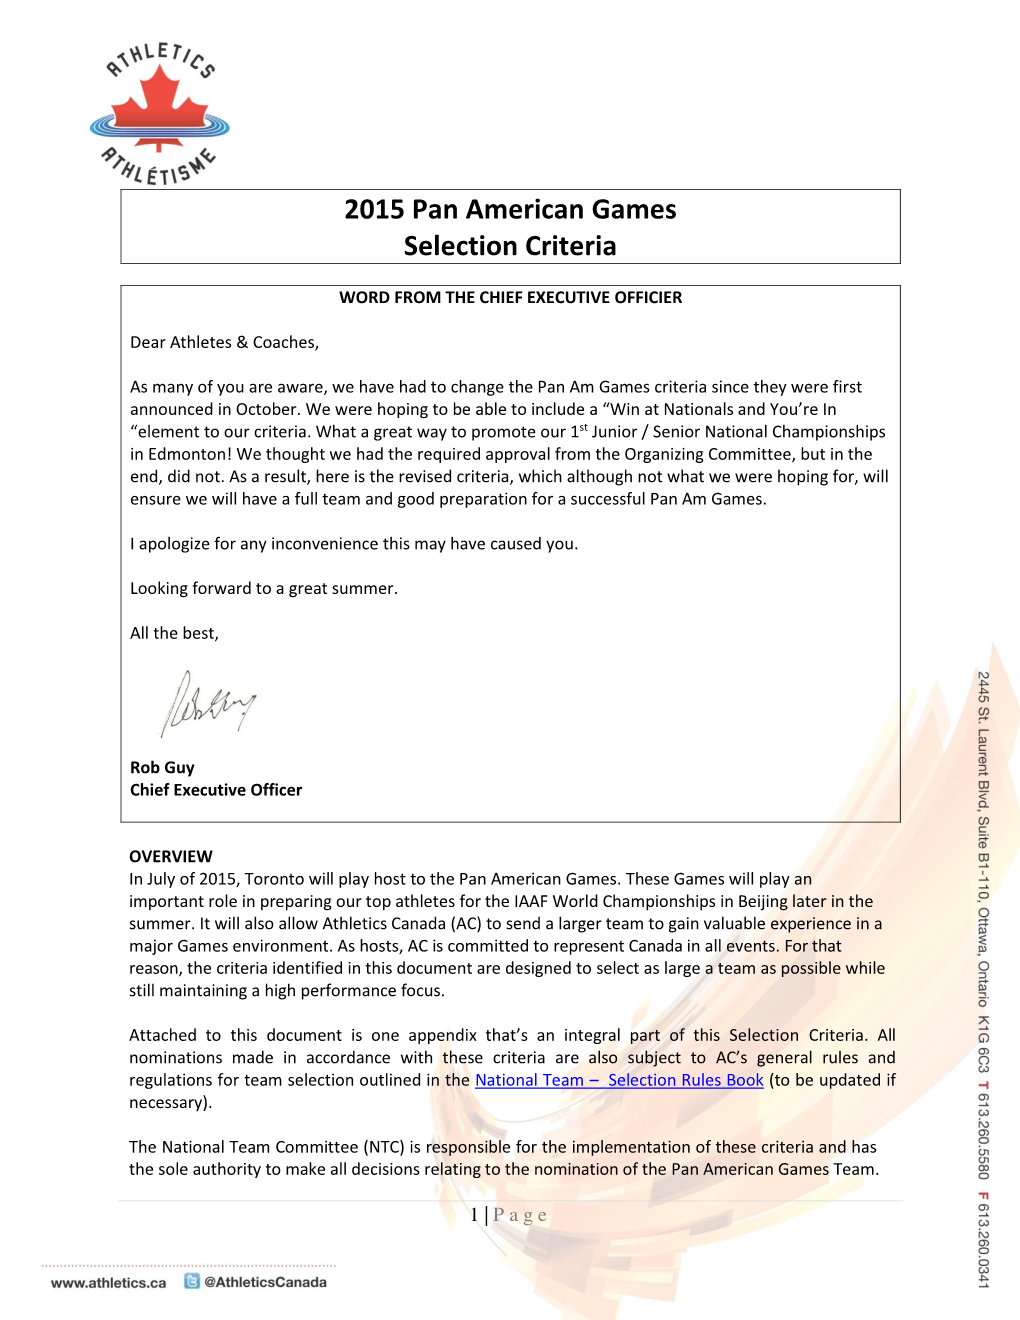 2015 Pan American Games Selection Criteria